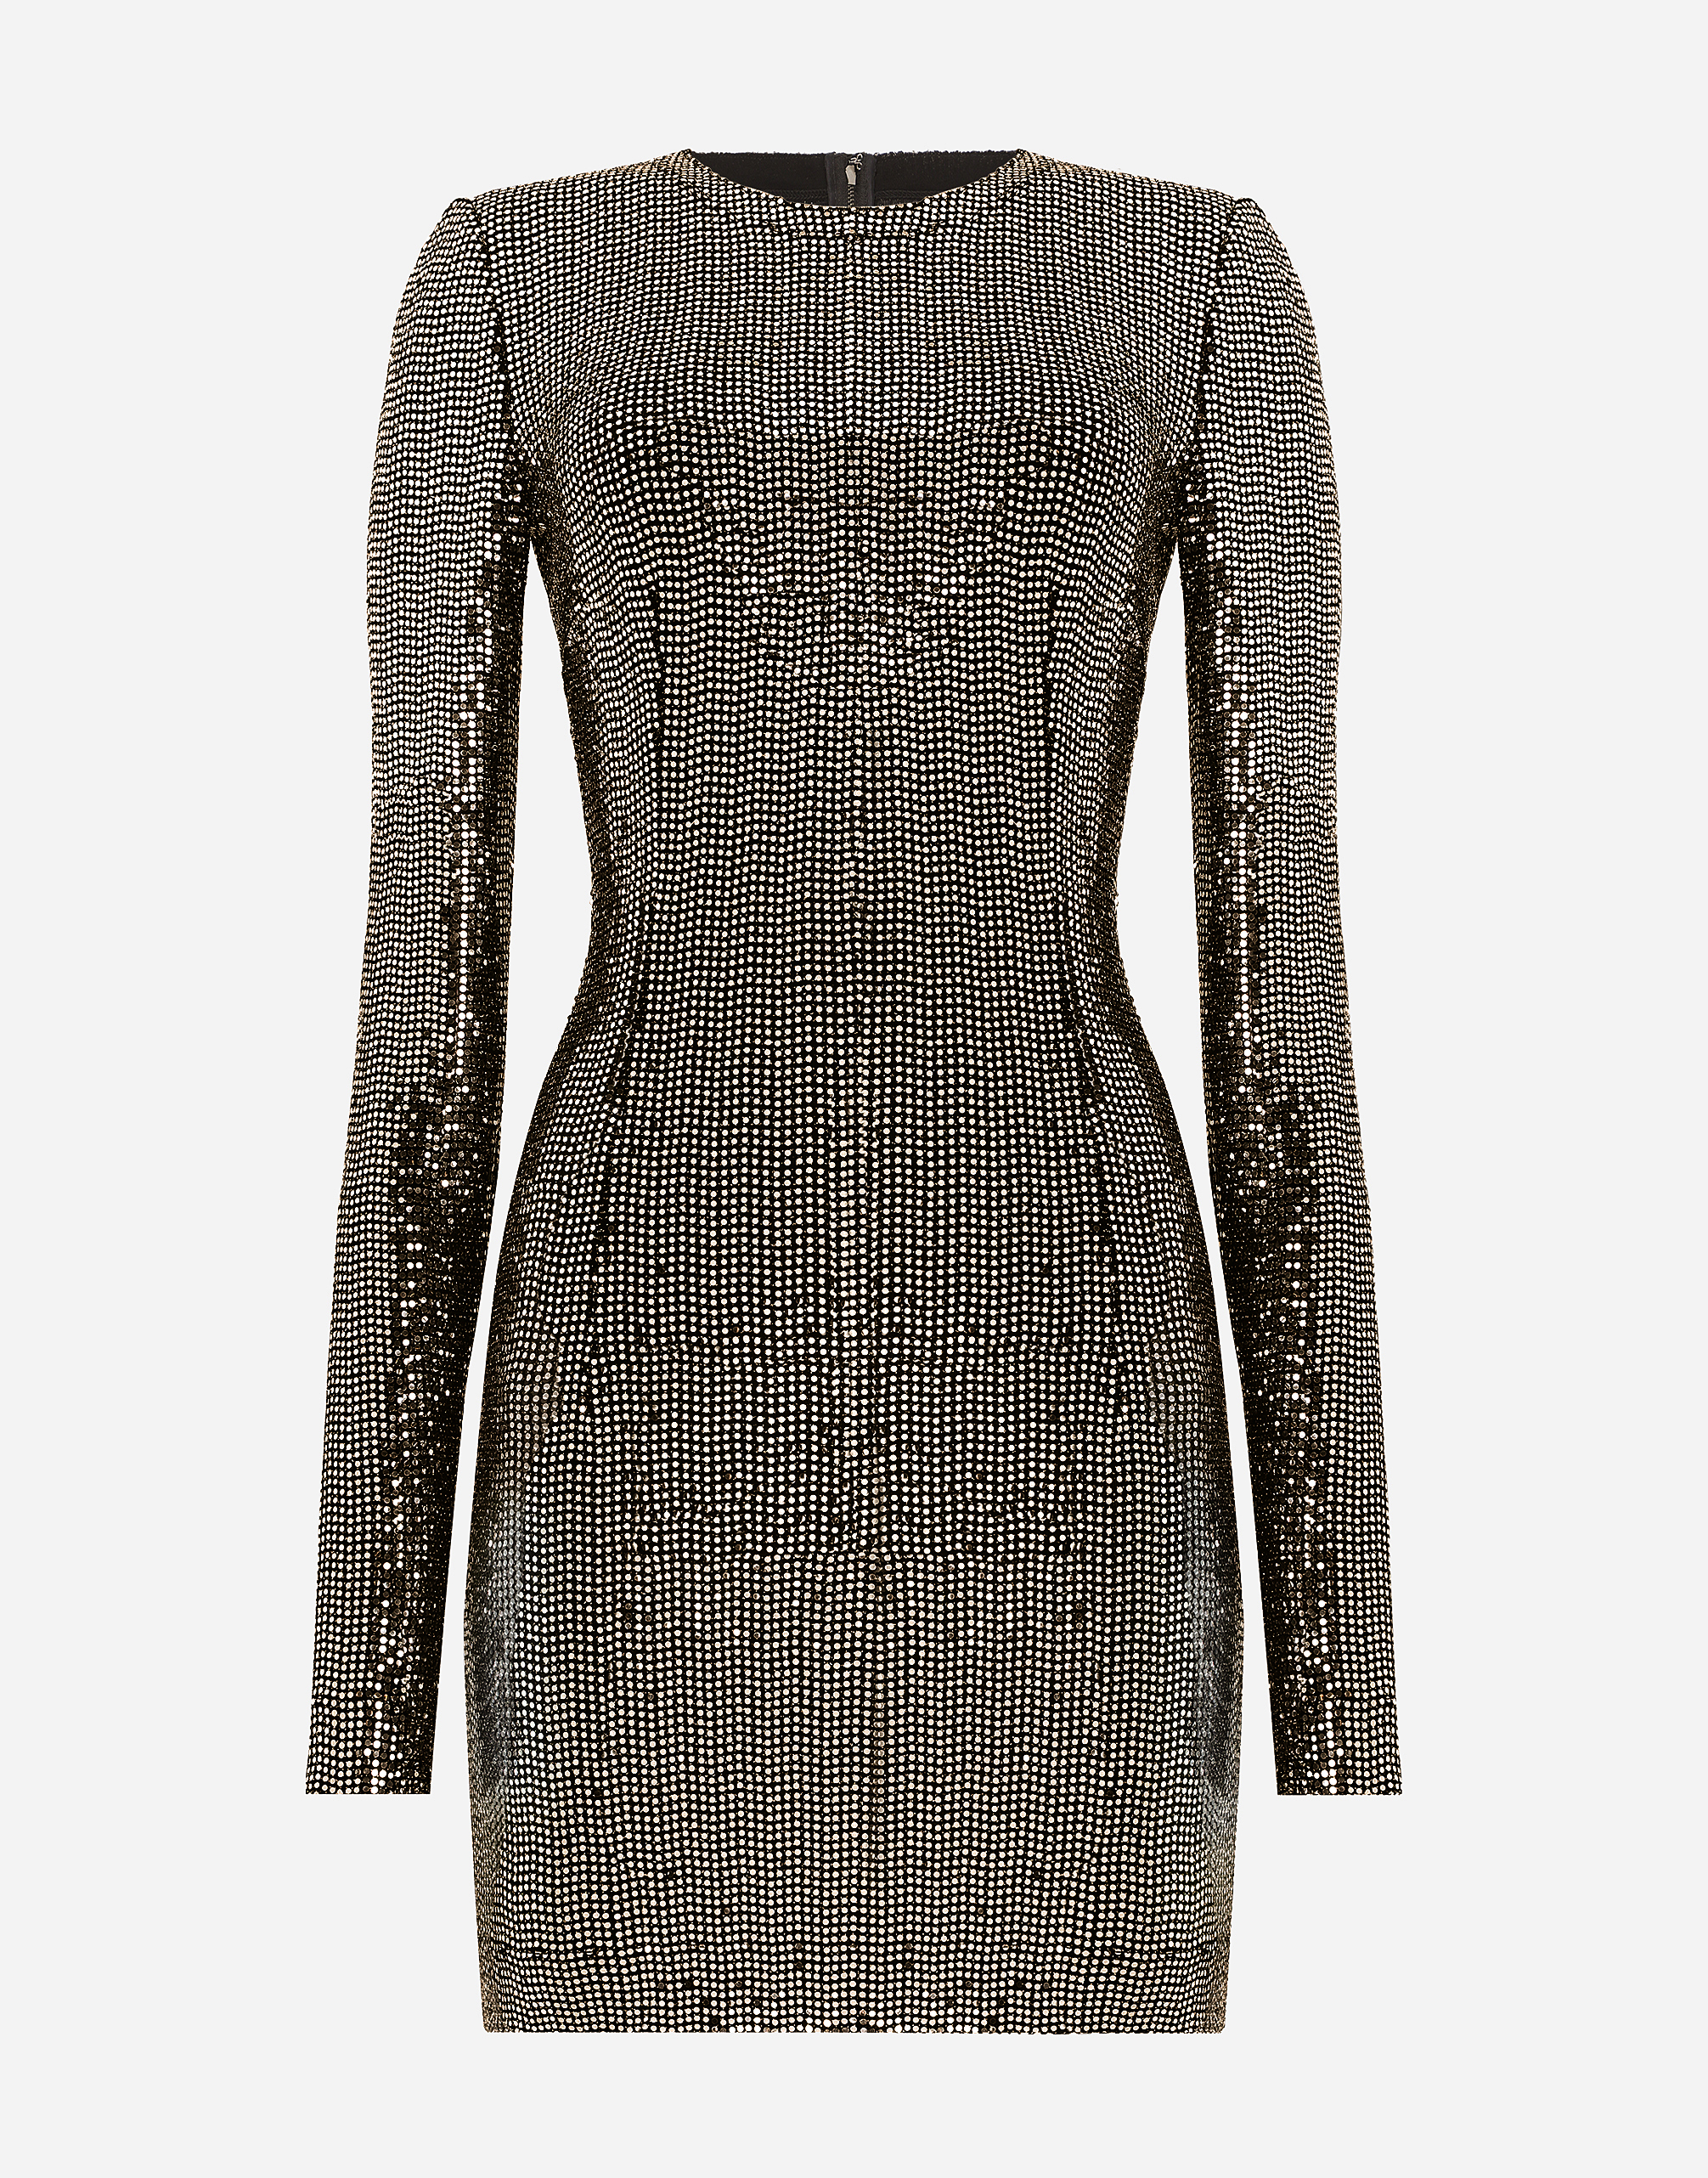 Dolce & Gabbana Short jersey dress with sequin embellishment